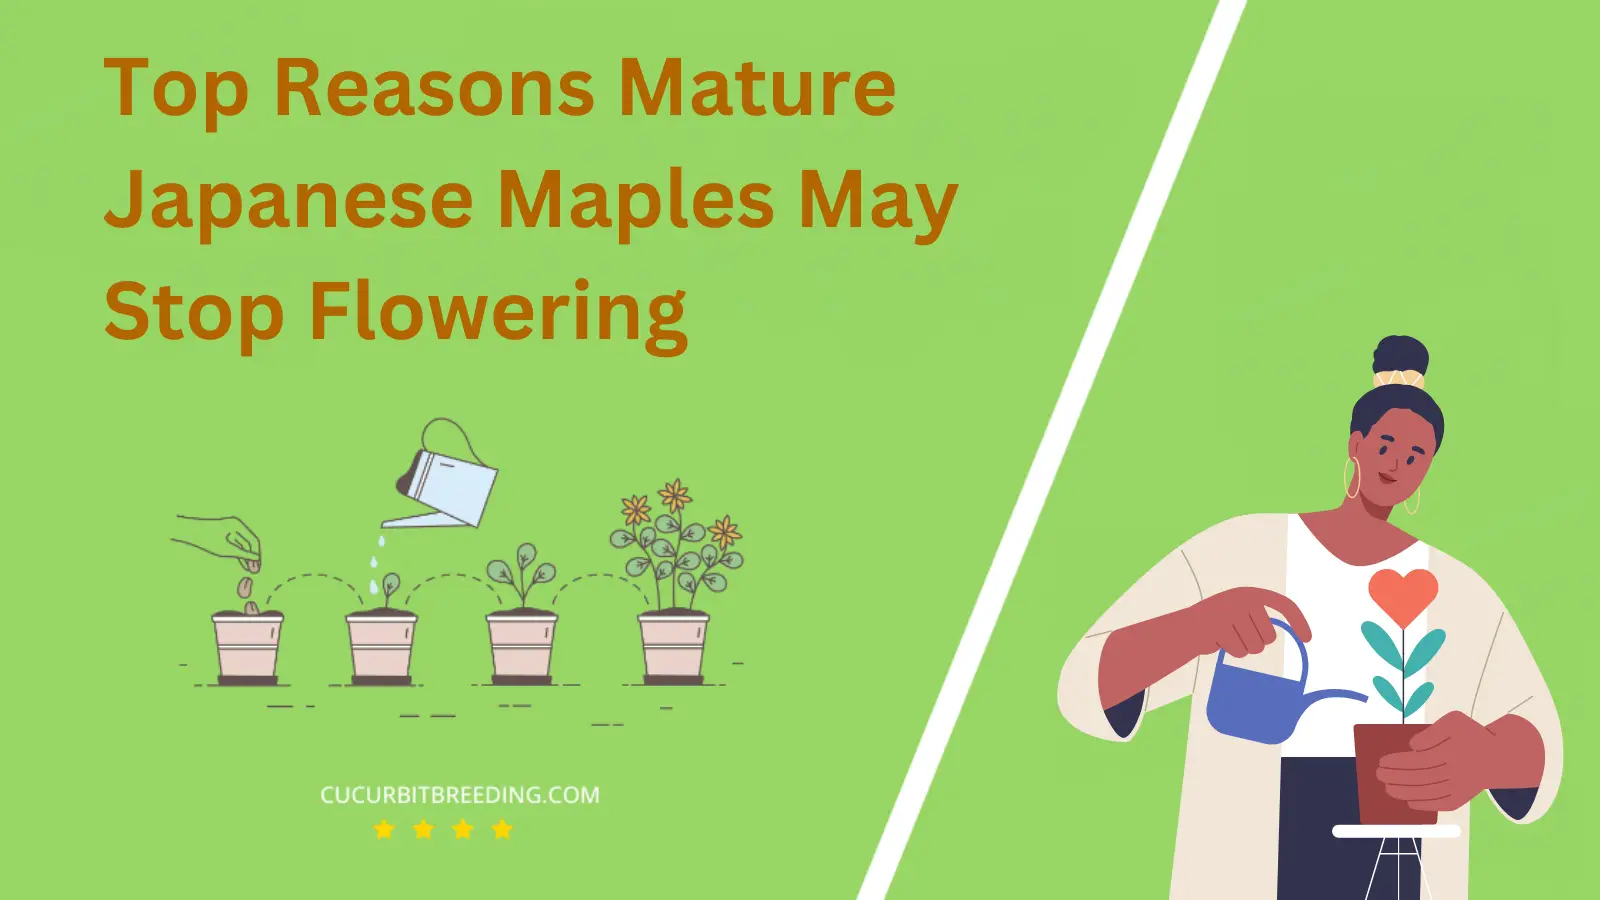 Top Reasons Mature Japanese Maples May Stop Flowering